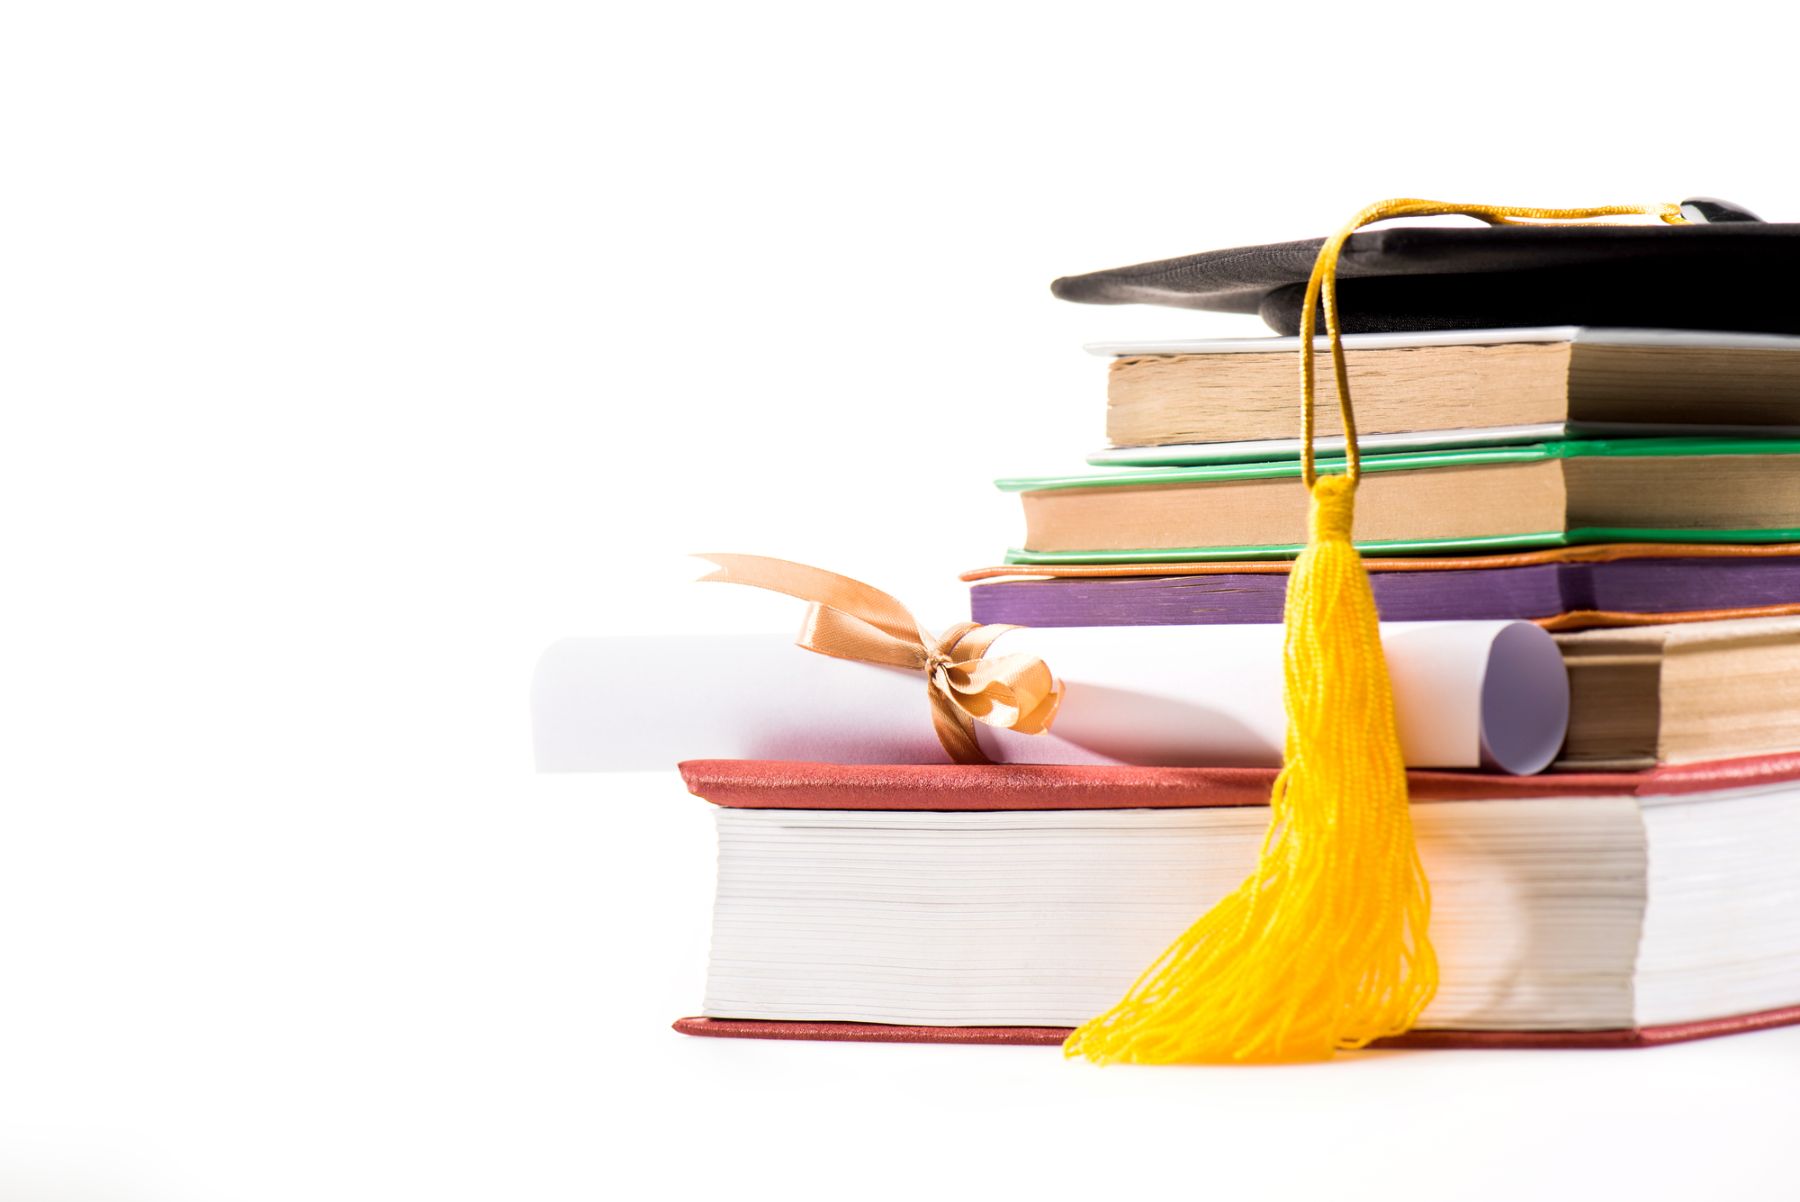 Books and a graduation cap